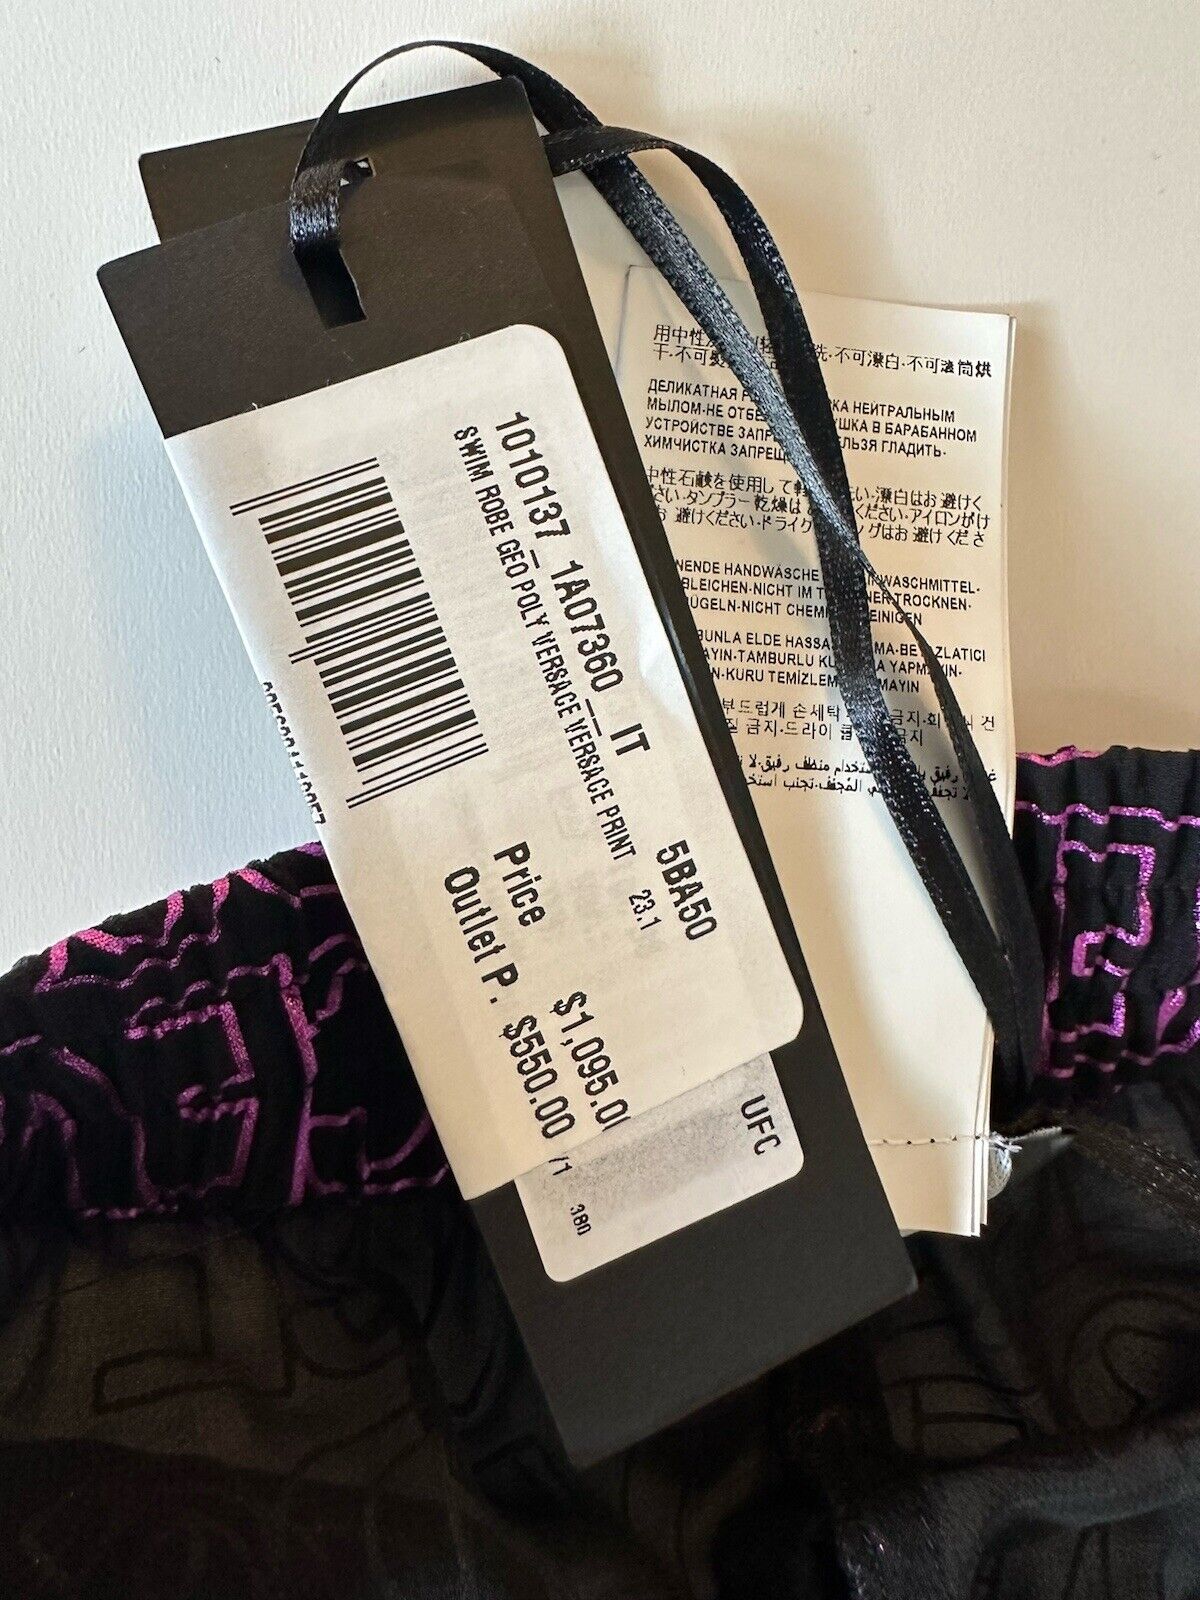 Versace Print Women’s Swim Robe Pants Black/Pink 4 US (38) IT 101013 NWT $1095